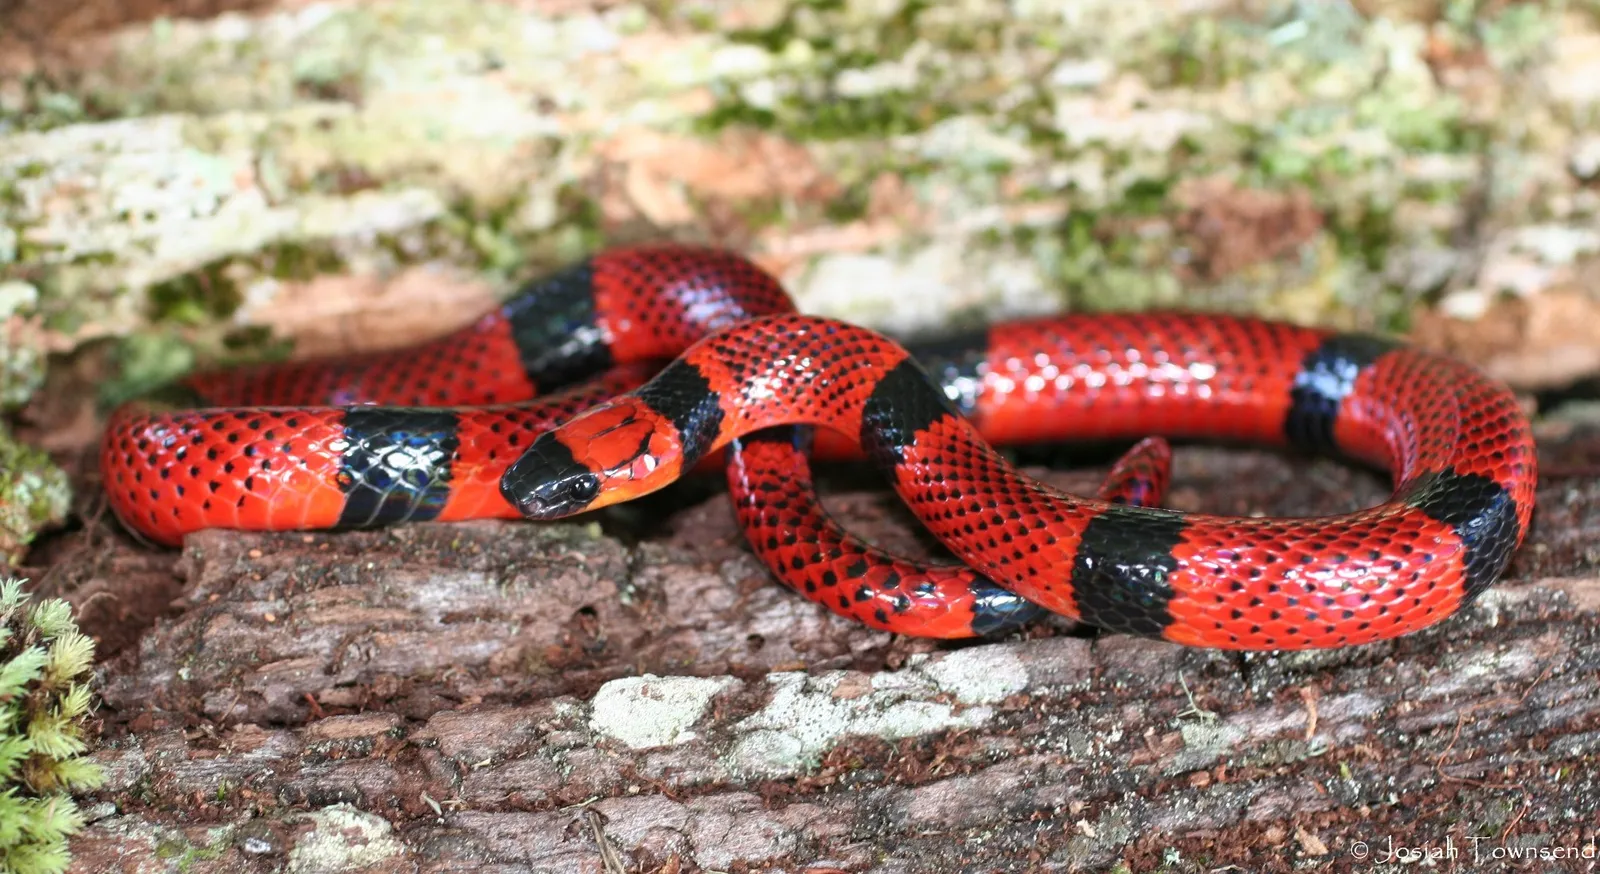 Decoding the Deadly Secret of Snake Venom | Science| Smithsonian Magazine